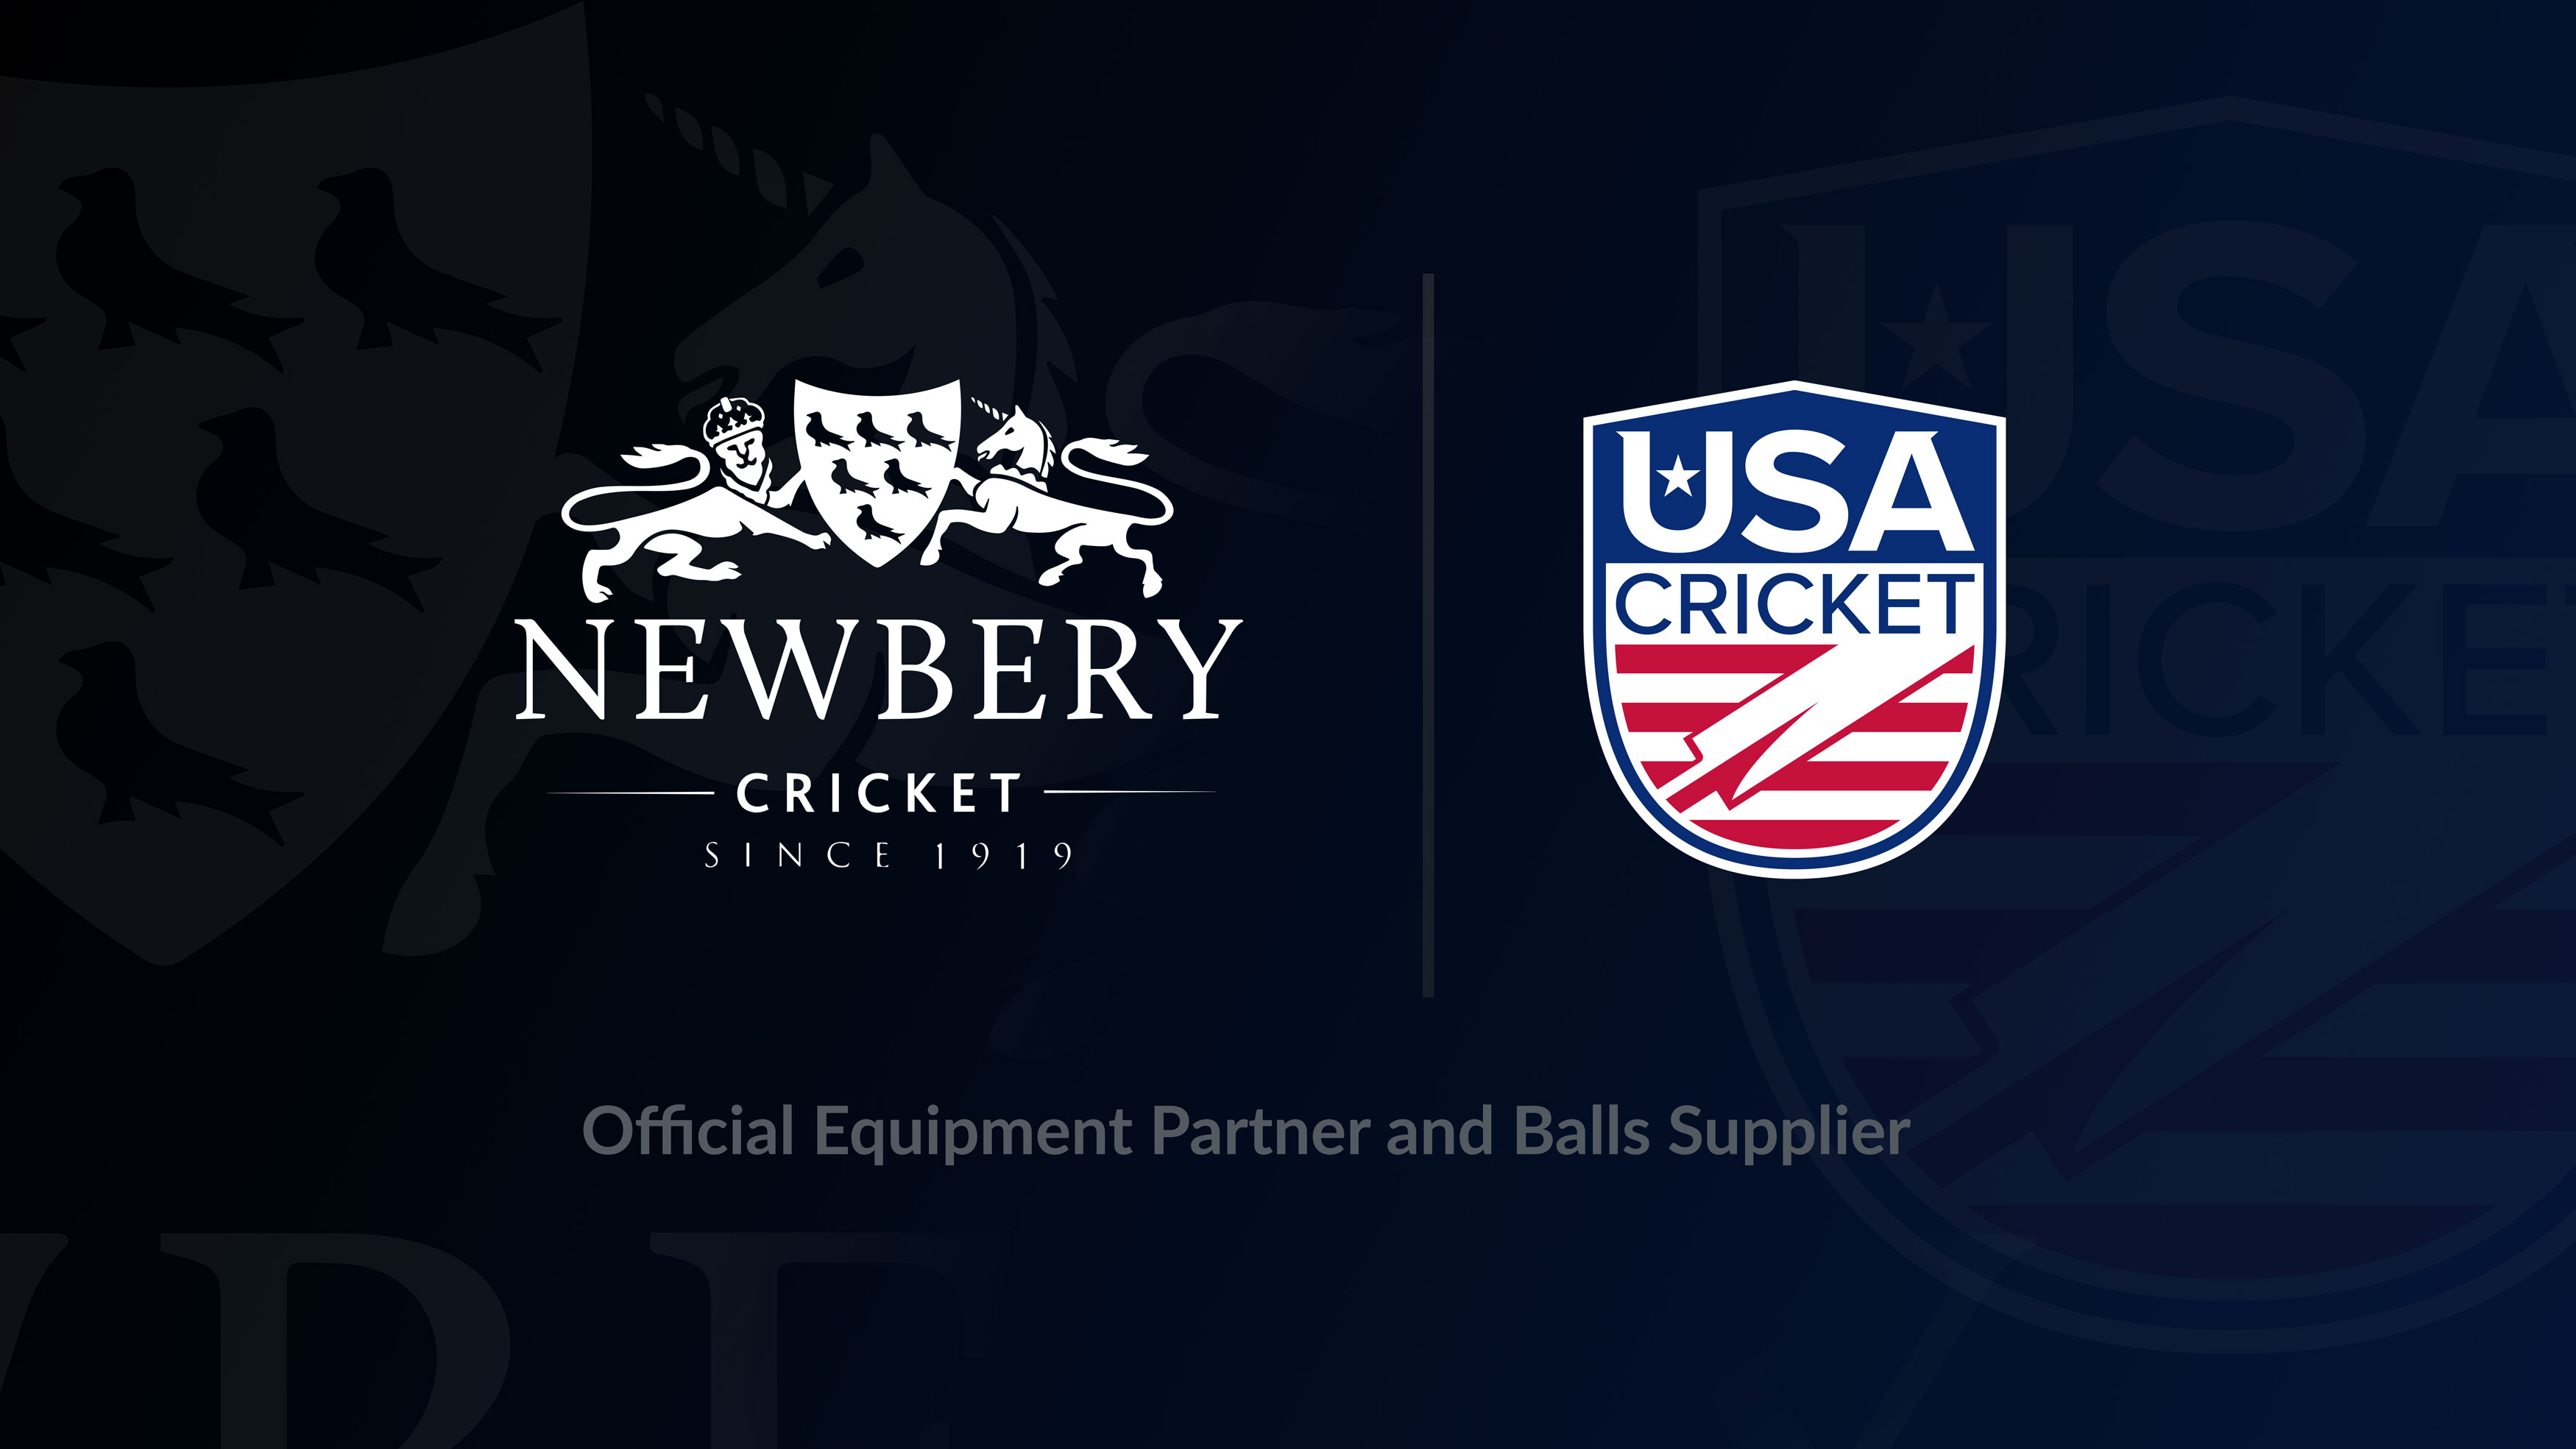 USA Cricket’s Official Equipment and Cricket Balls Supplier, Newbery Award 4 Players from Women’s Regionals